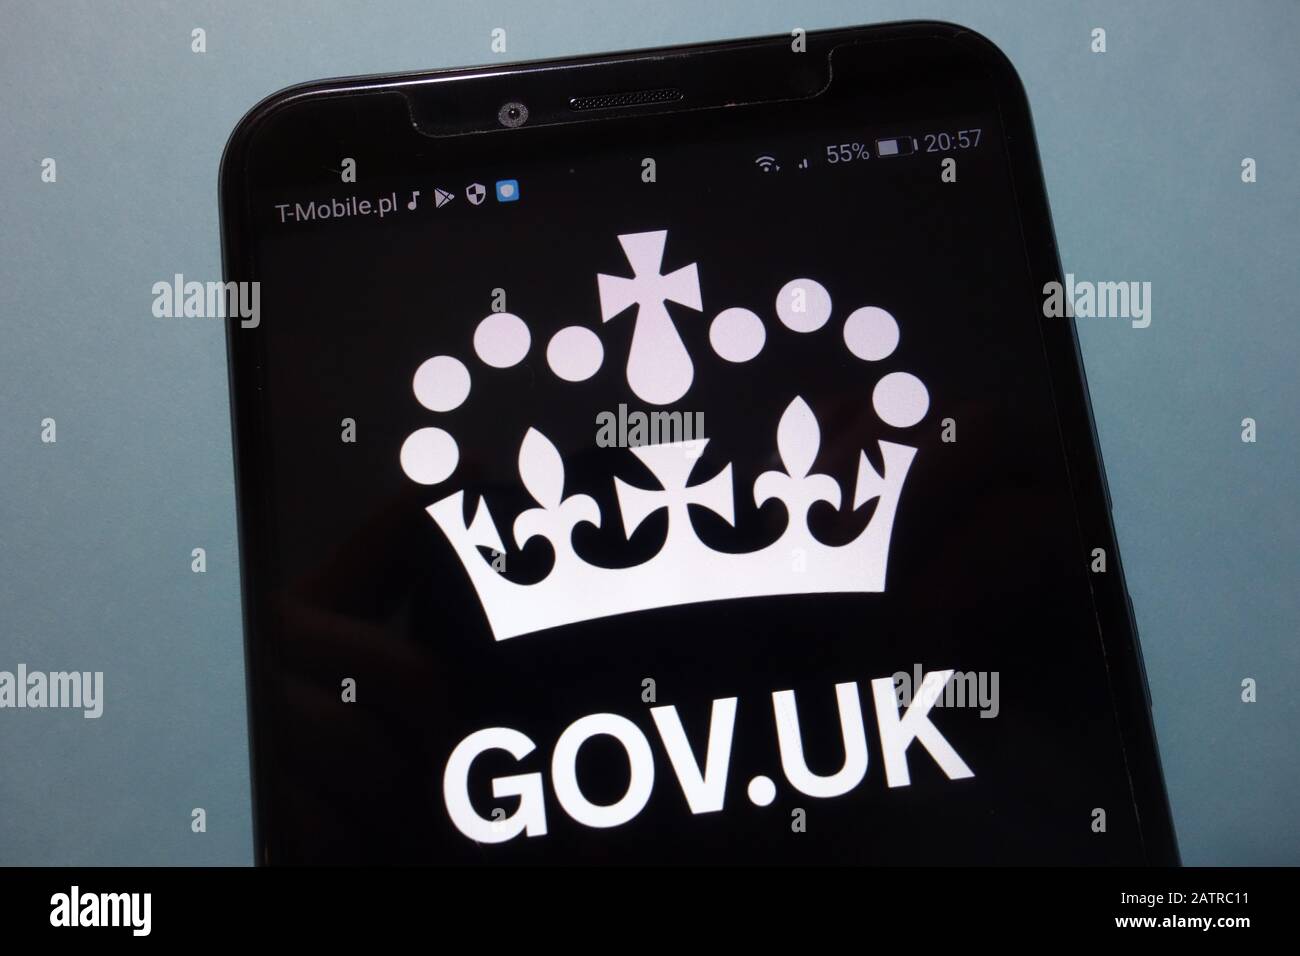 Gov.uk logo on smartphone Stock Photo